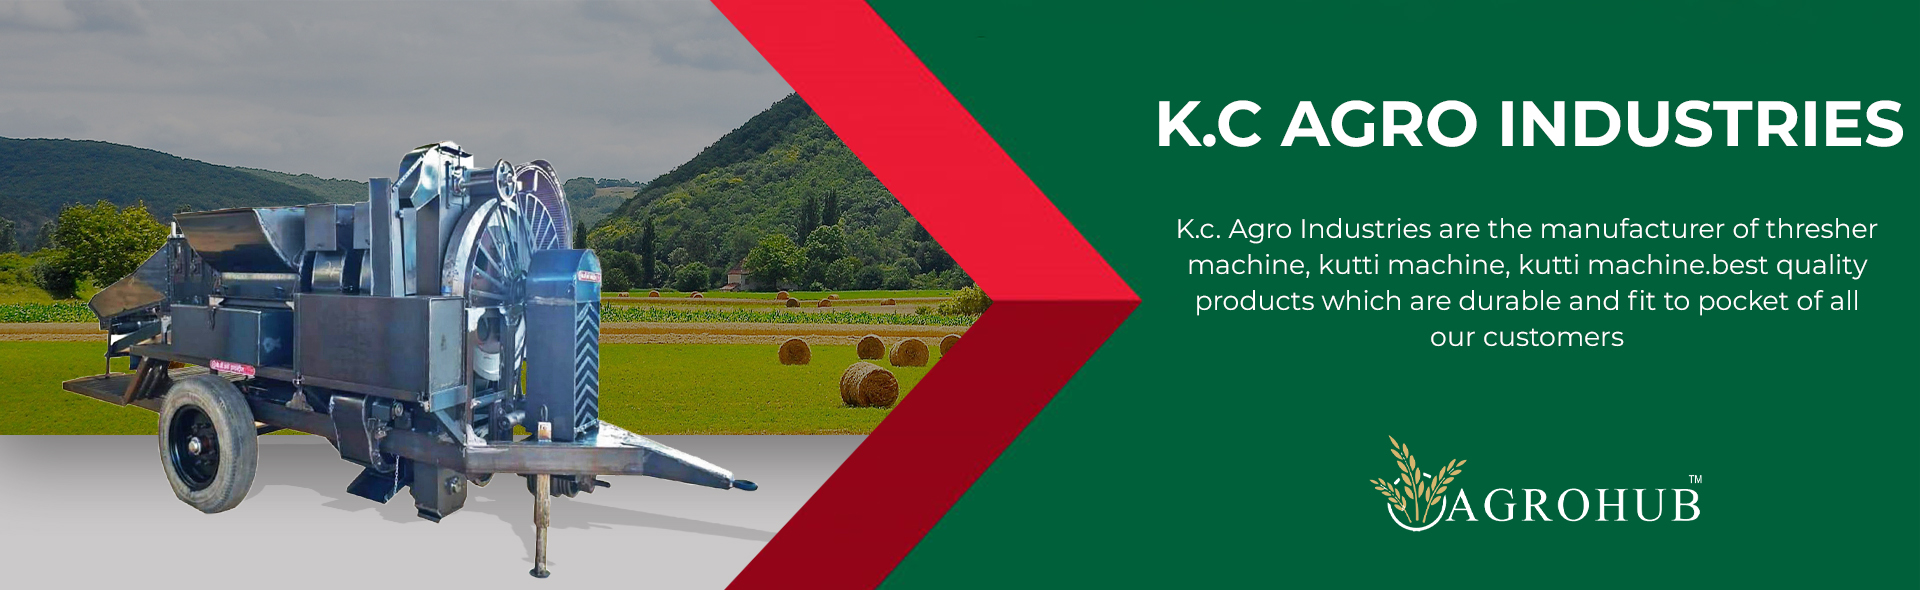 K.C. Agro Industries